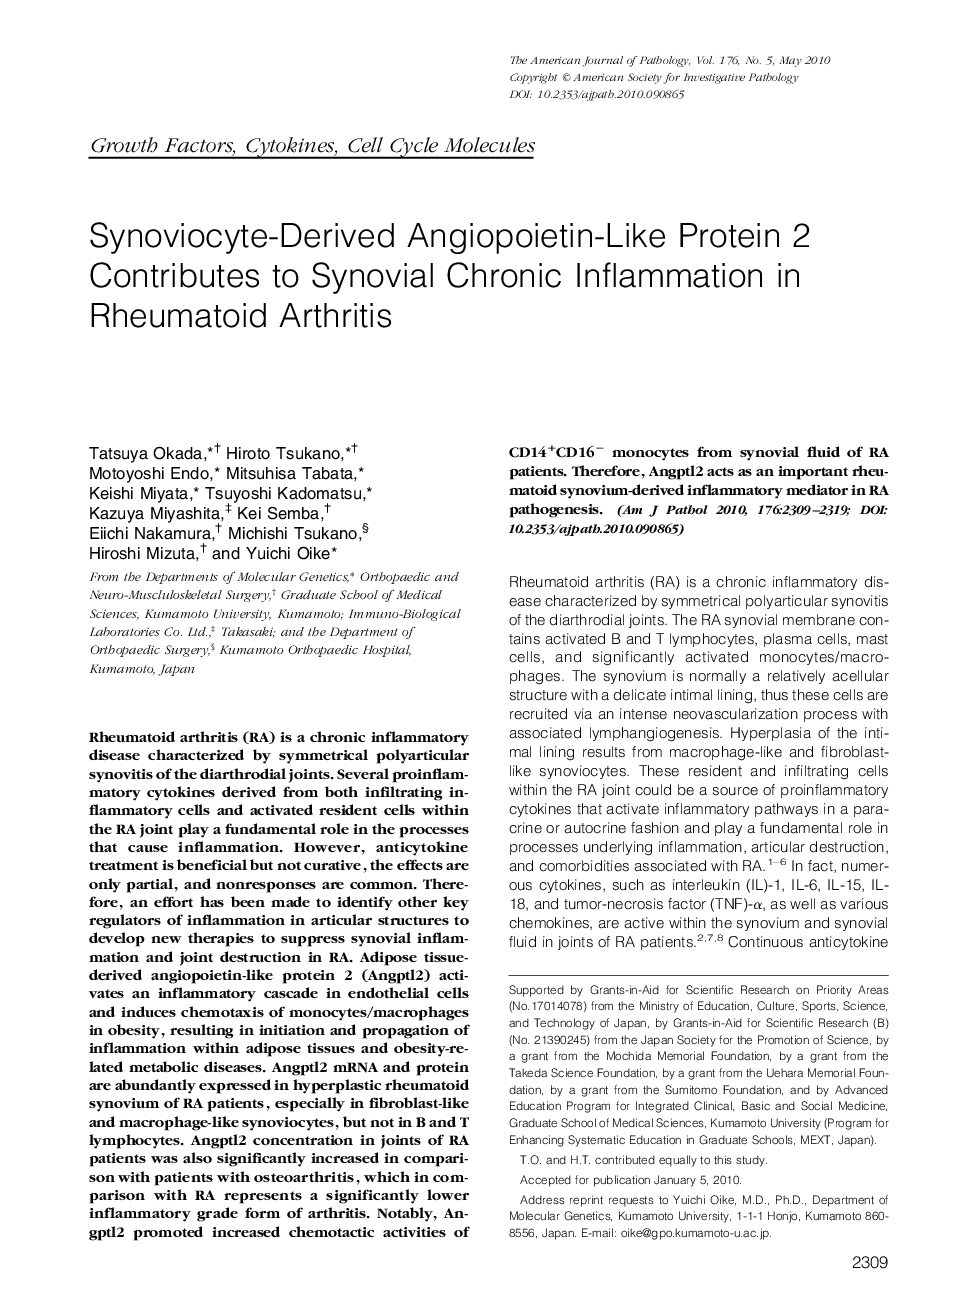 Synoviocyte-Derived Angiopoietin-Like Protein 2 Contributes to Synovial Chronic Inflammation in Rheumatoid Arthritis